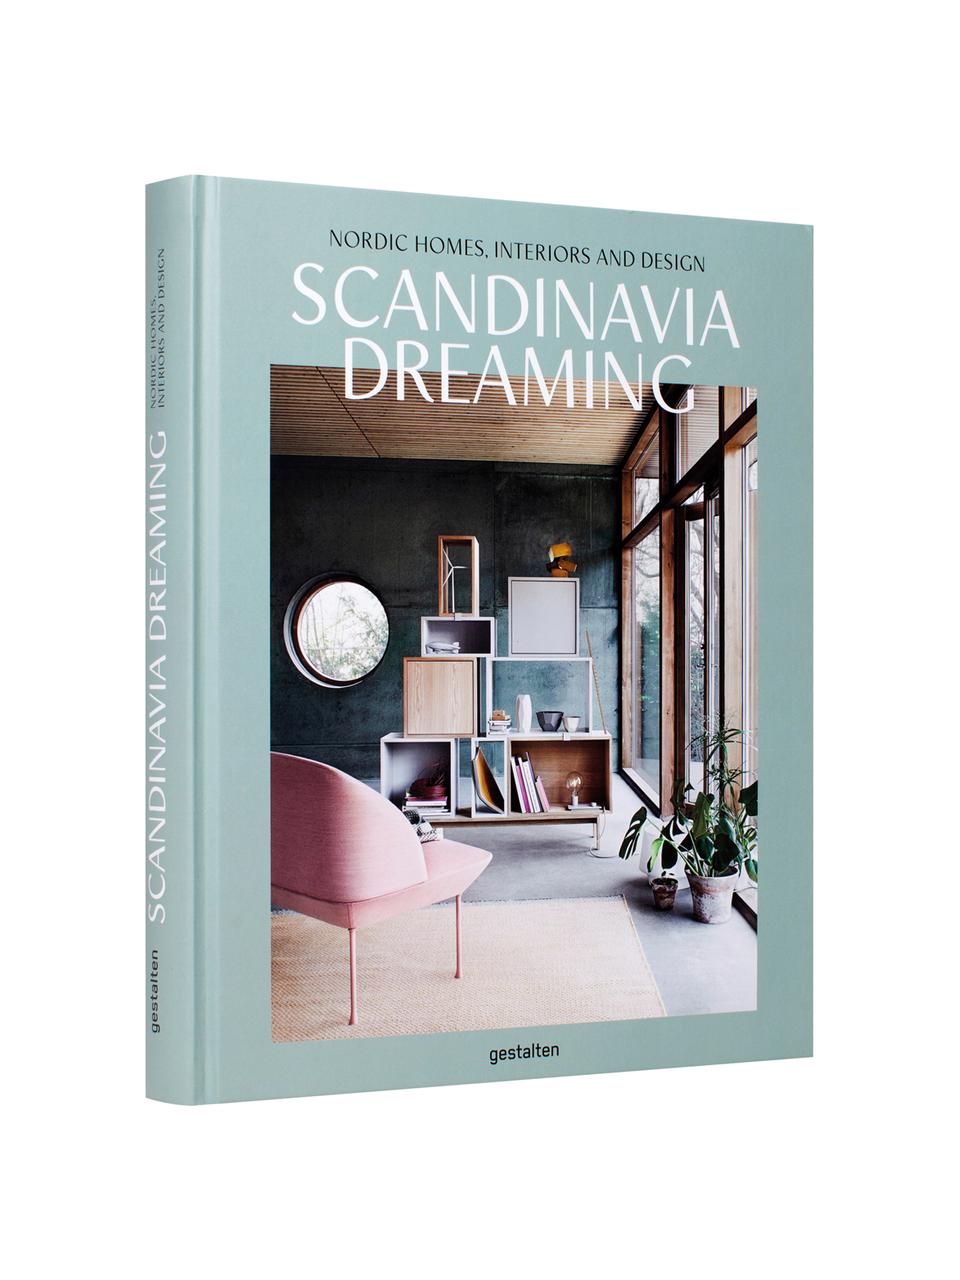 Geïllustreerd boek Scandinavia Dreaming, Papier, hardcover, Multicolour, B 24 x L 30 cm